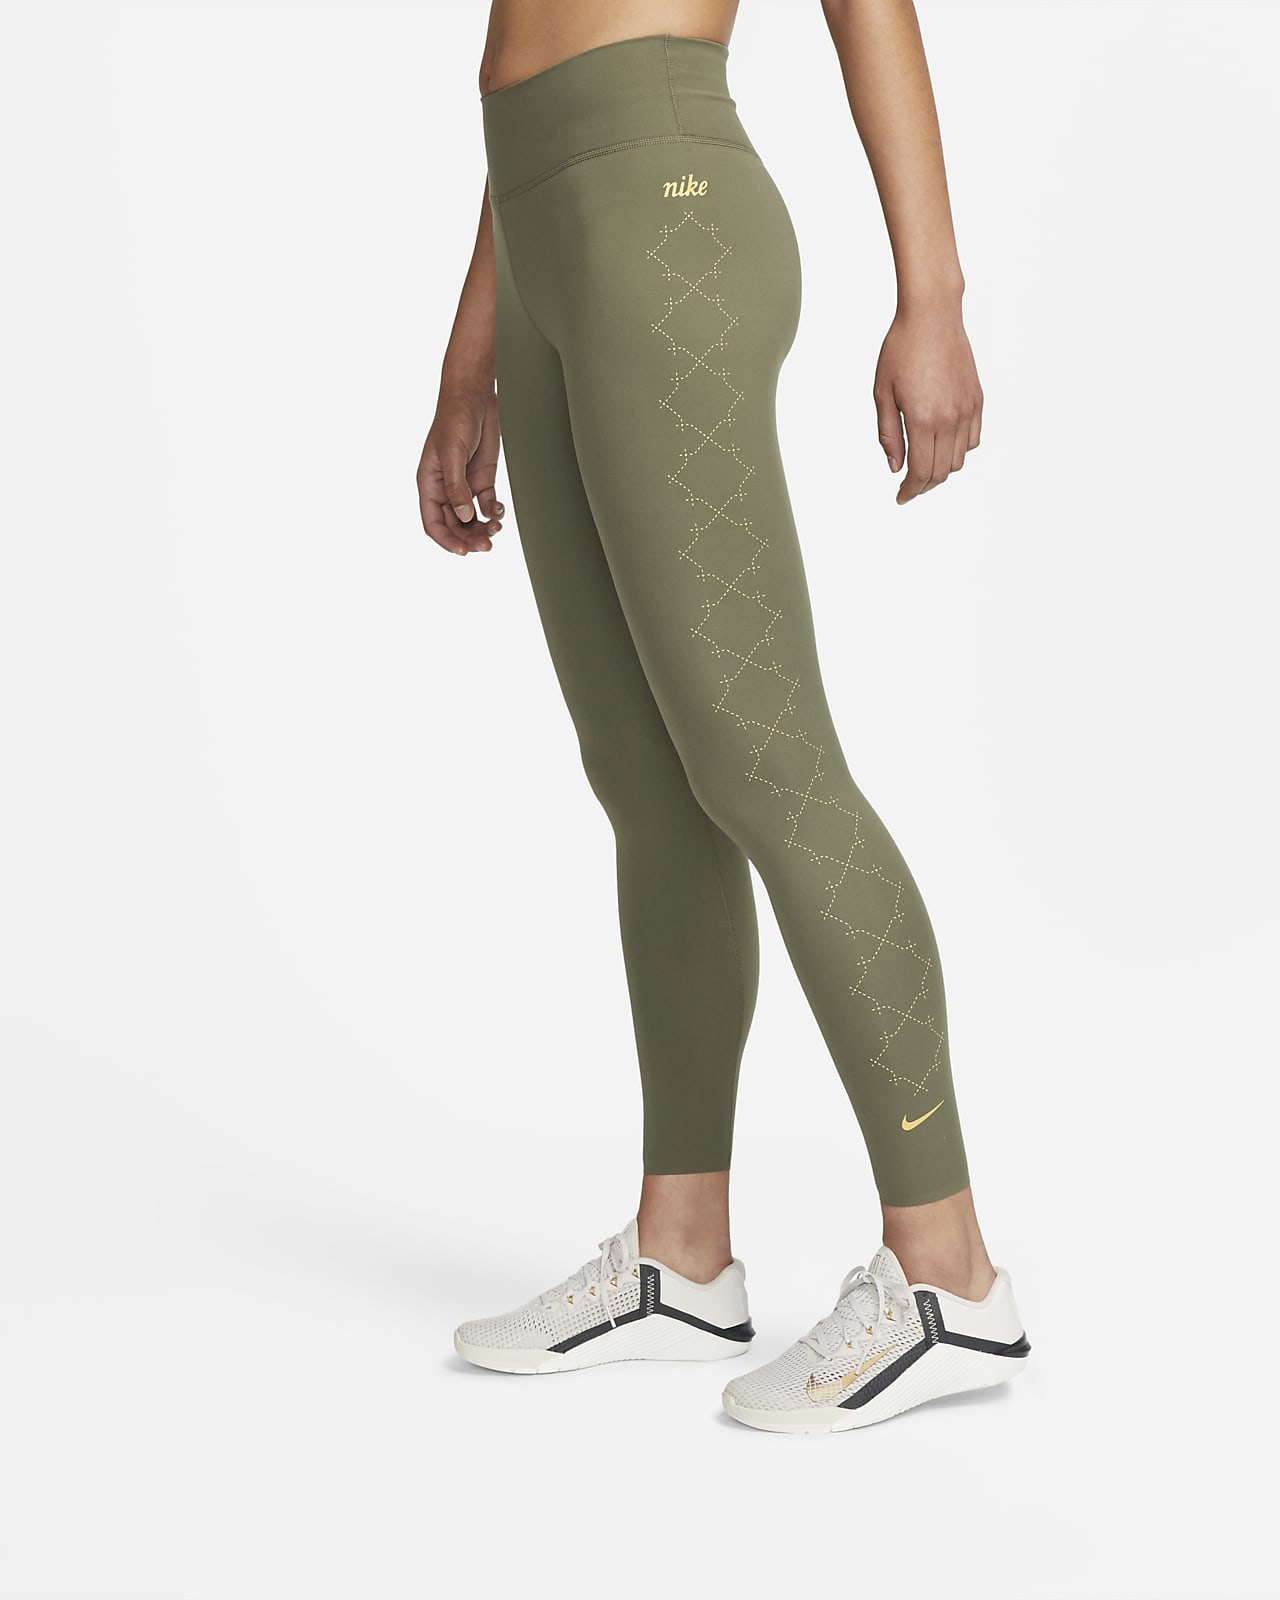 Nike One Luxe Women's Mid-Rise 7/8 Printed Leggings